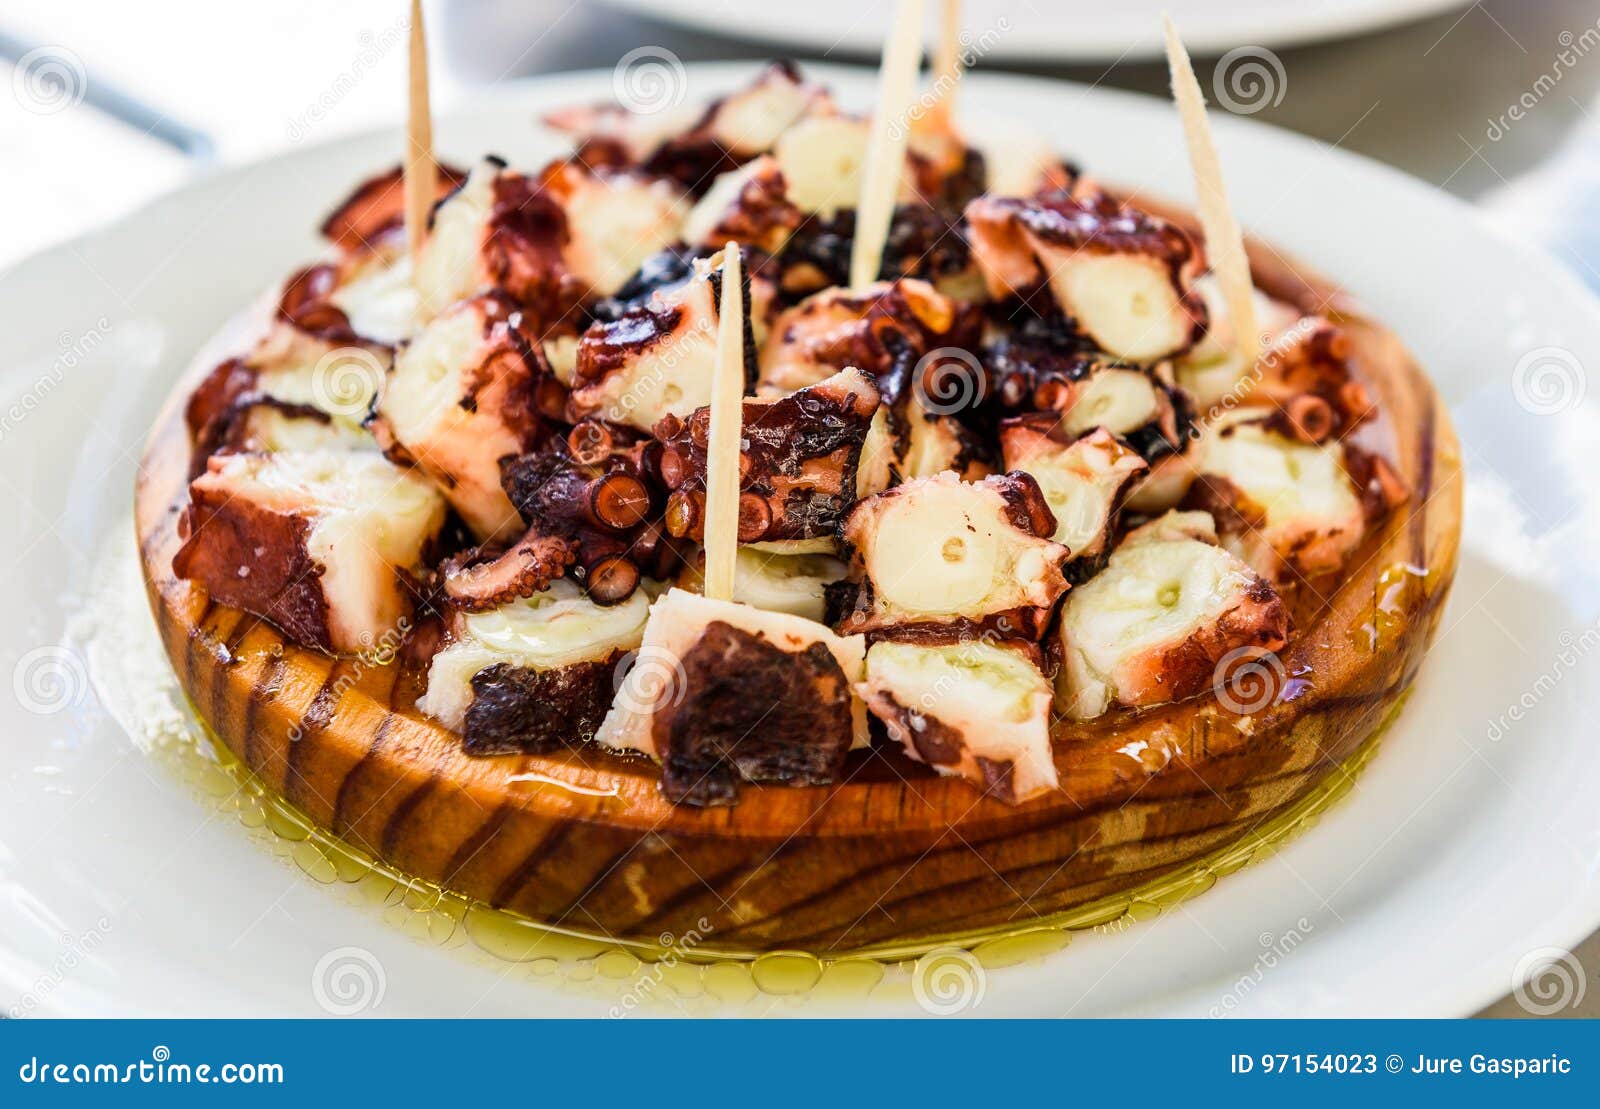 delicious spanish octopus on wooden plate pulpo a la gallega.